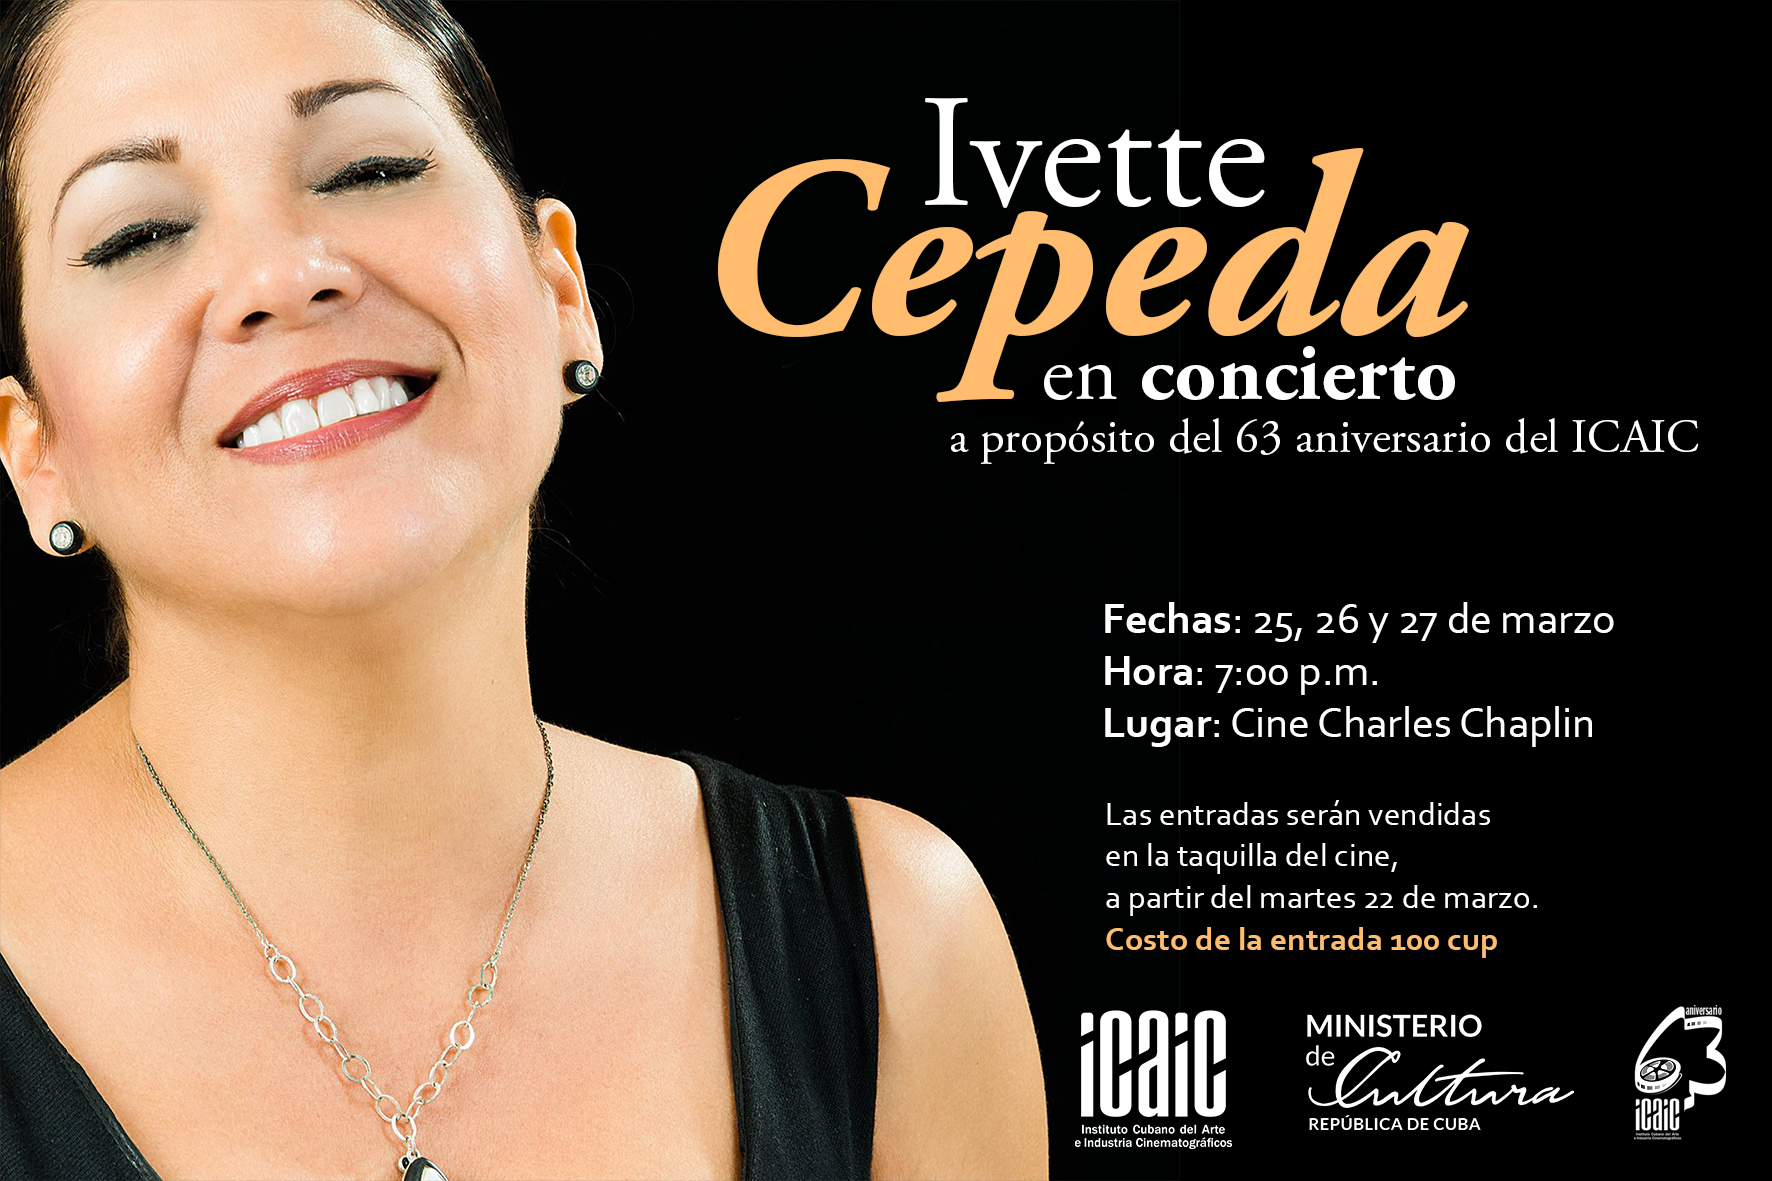 Cartel promocional Ivett Cepeda